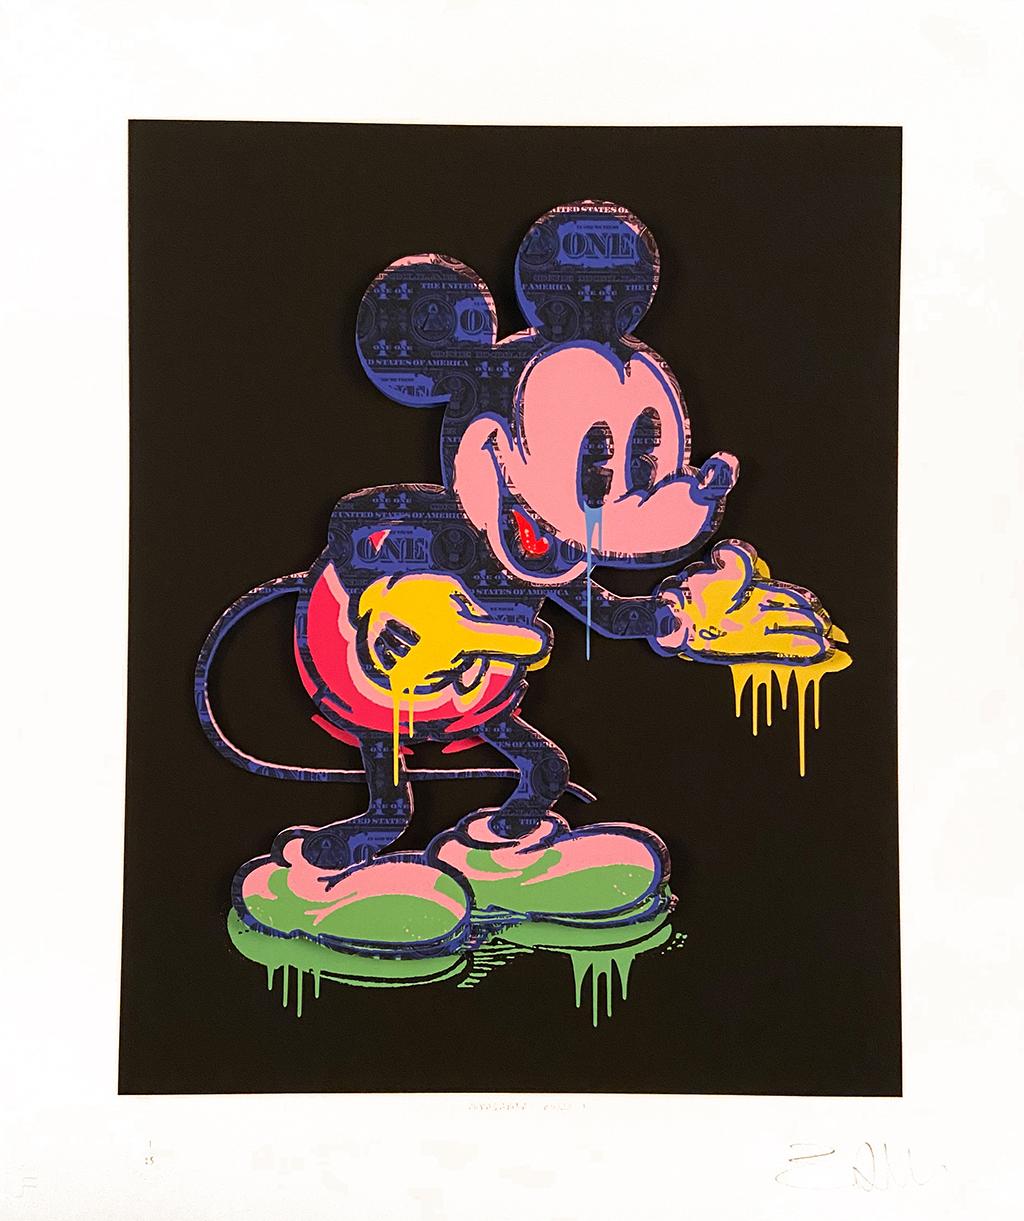 Mouse I (Pop Art, Street Art, Urban Art, Disney) (LARGE!!)